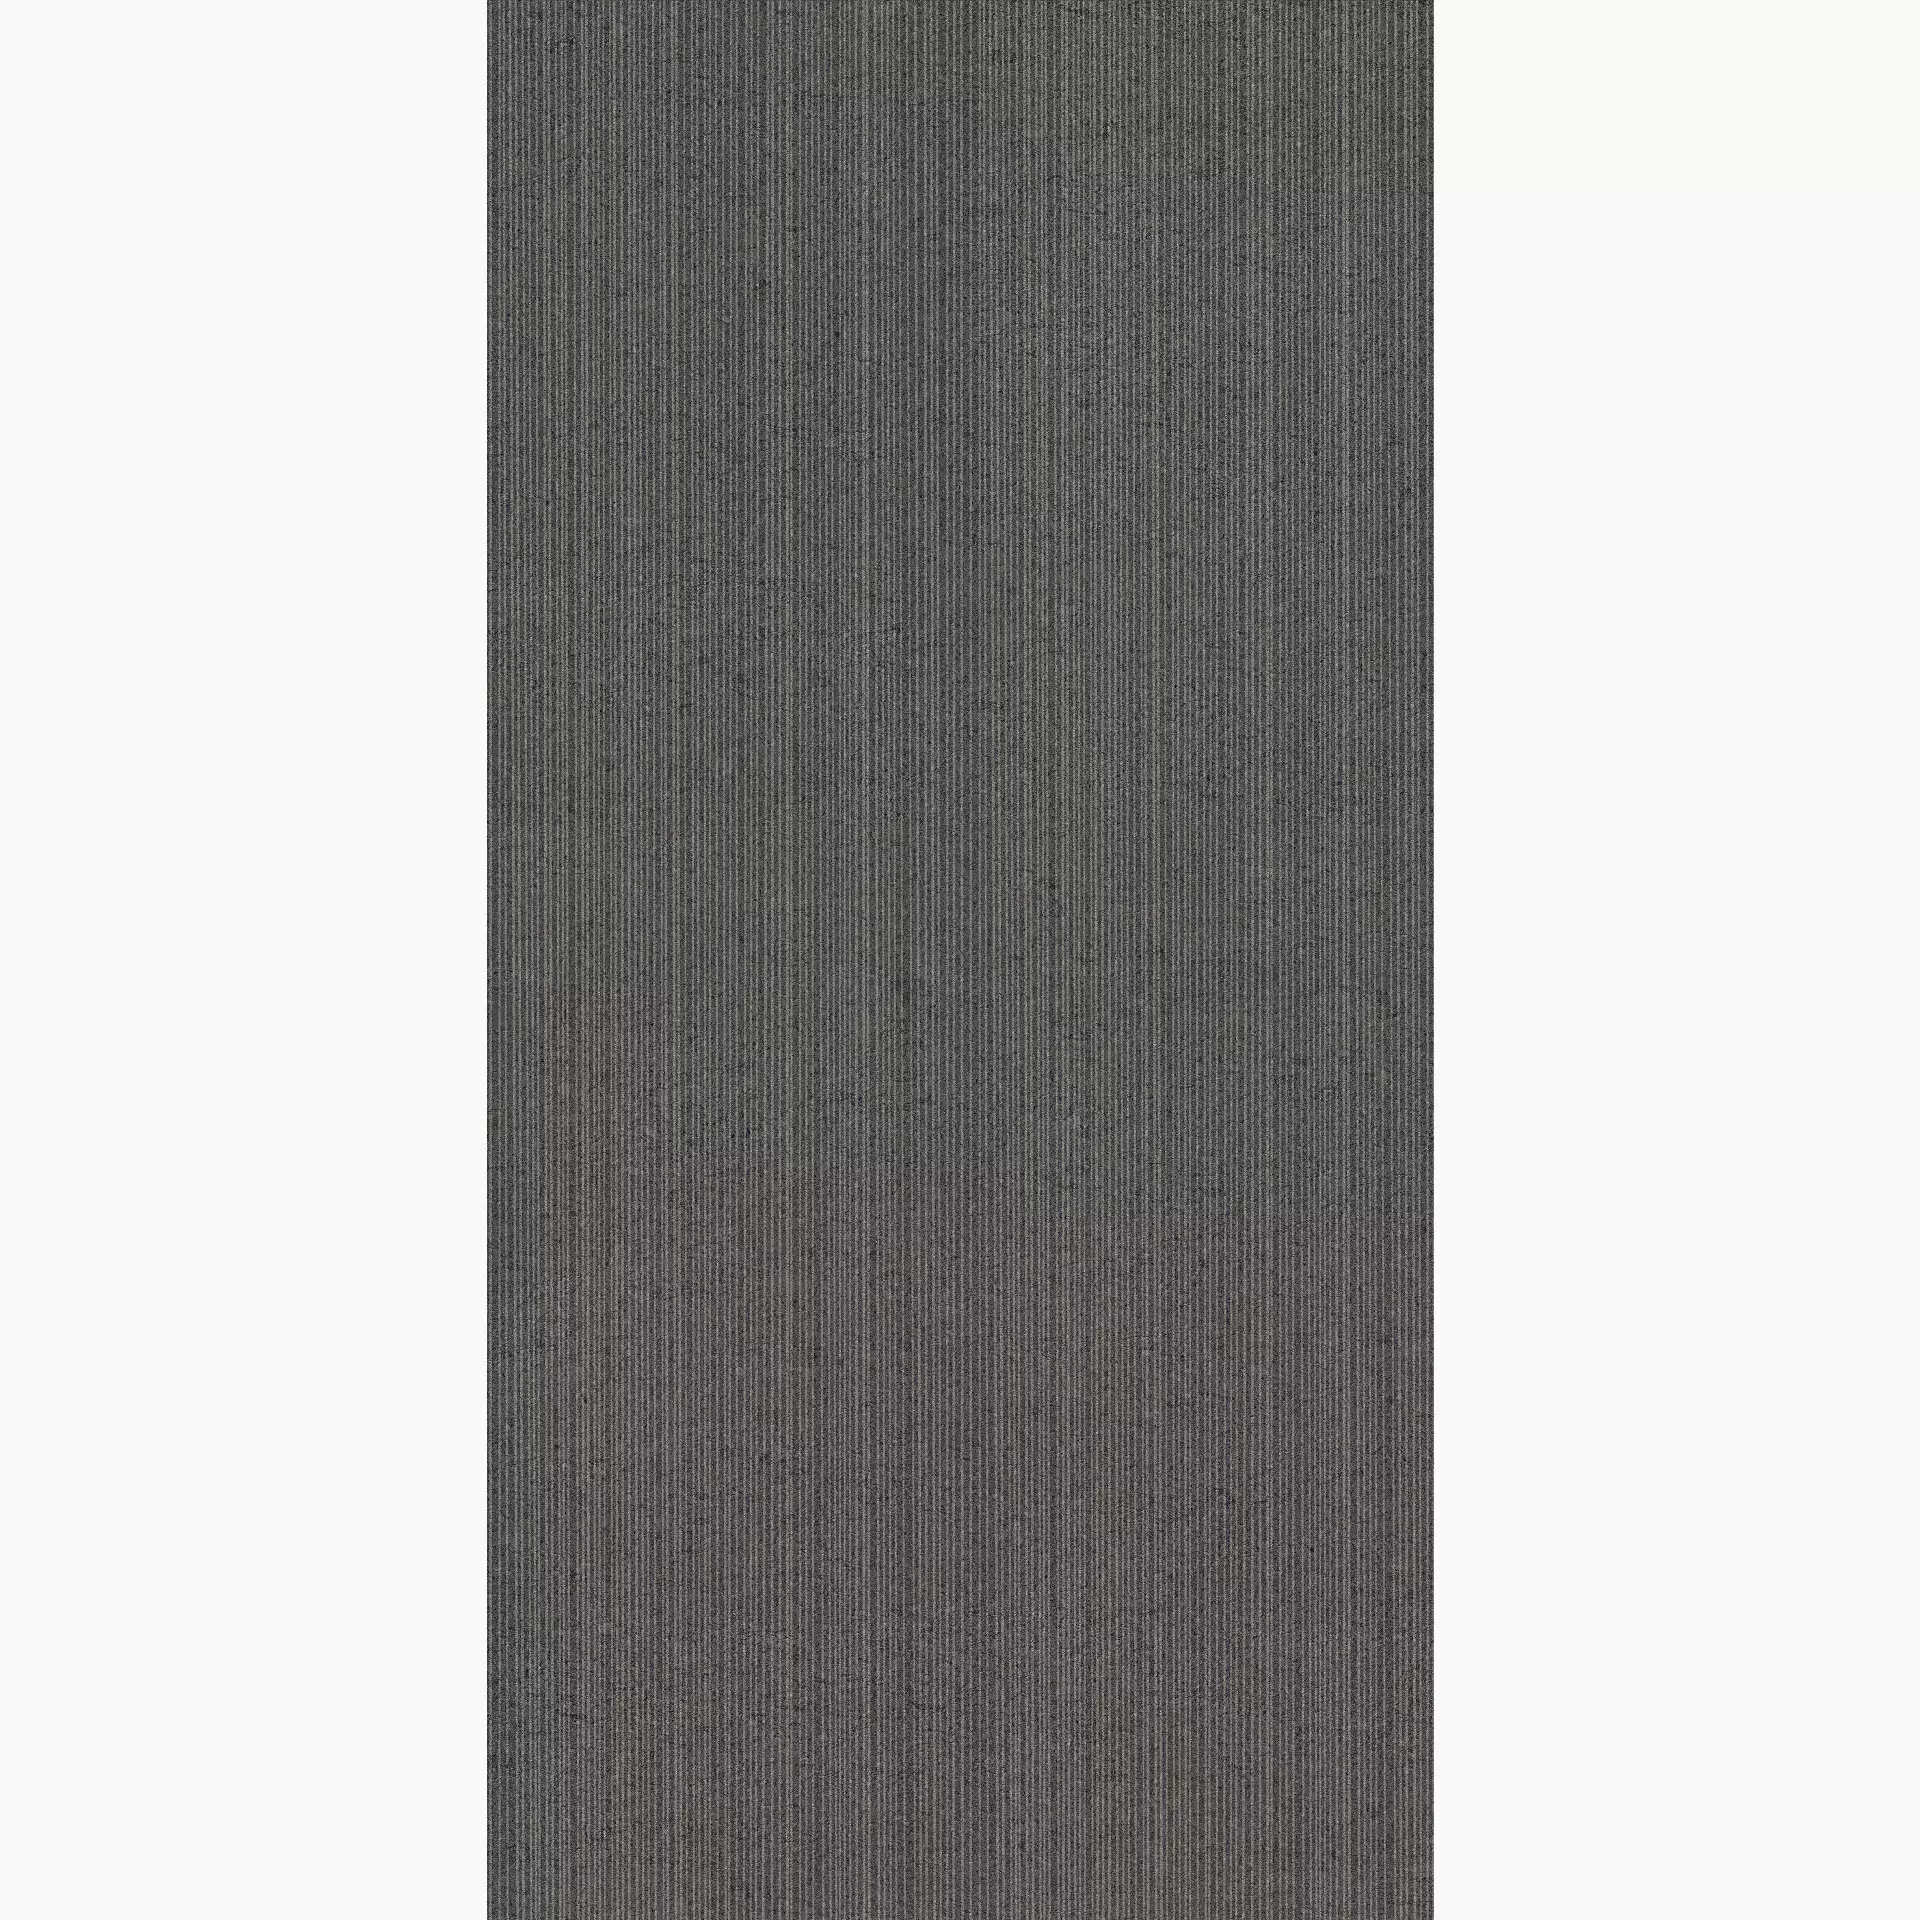 Coem Tweed Stone Black Naturale Black TWS367R natur struktur 30x60cm Straight rektifiziert 9mm